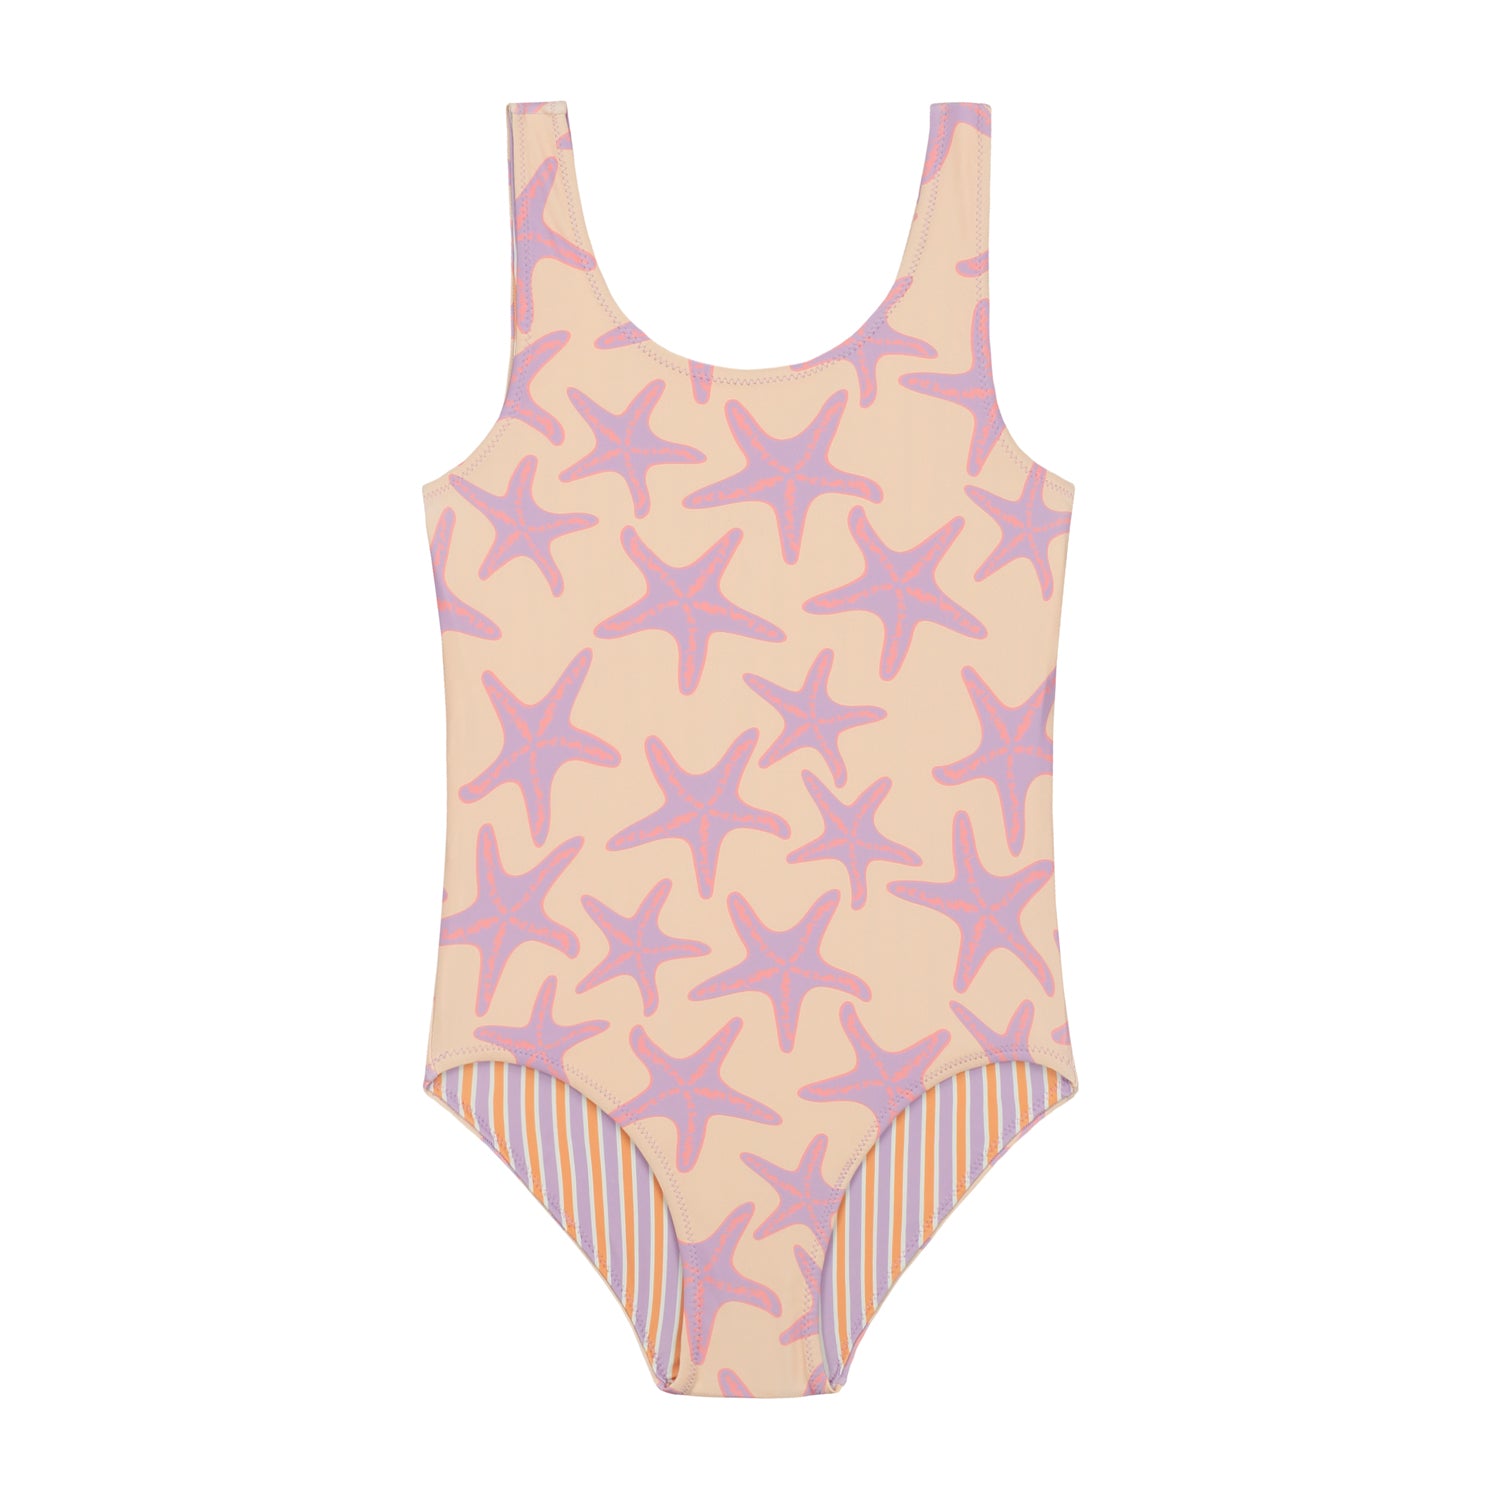 Girls RUBY REVERSIBLE swimsuit STRIPED STARFISH